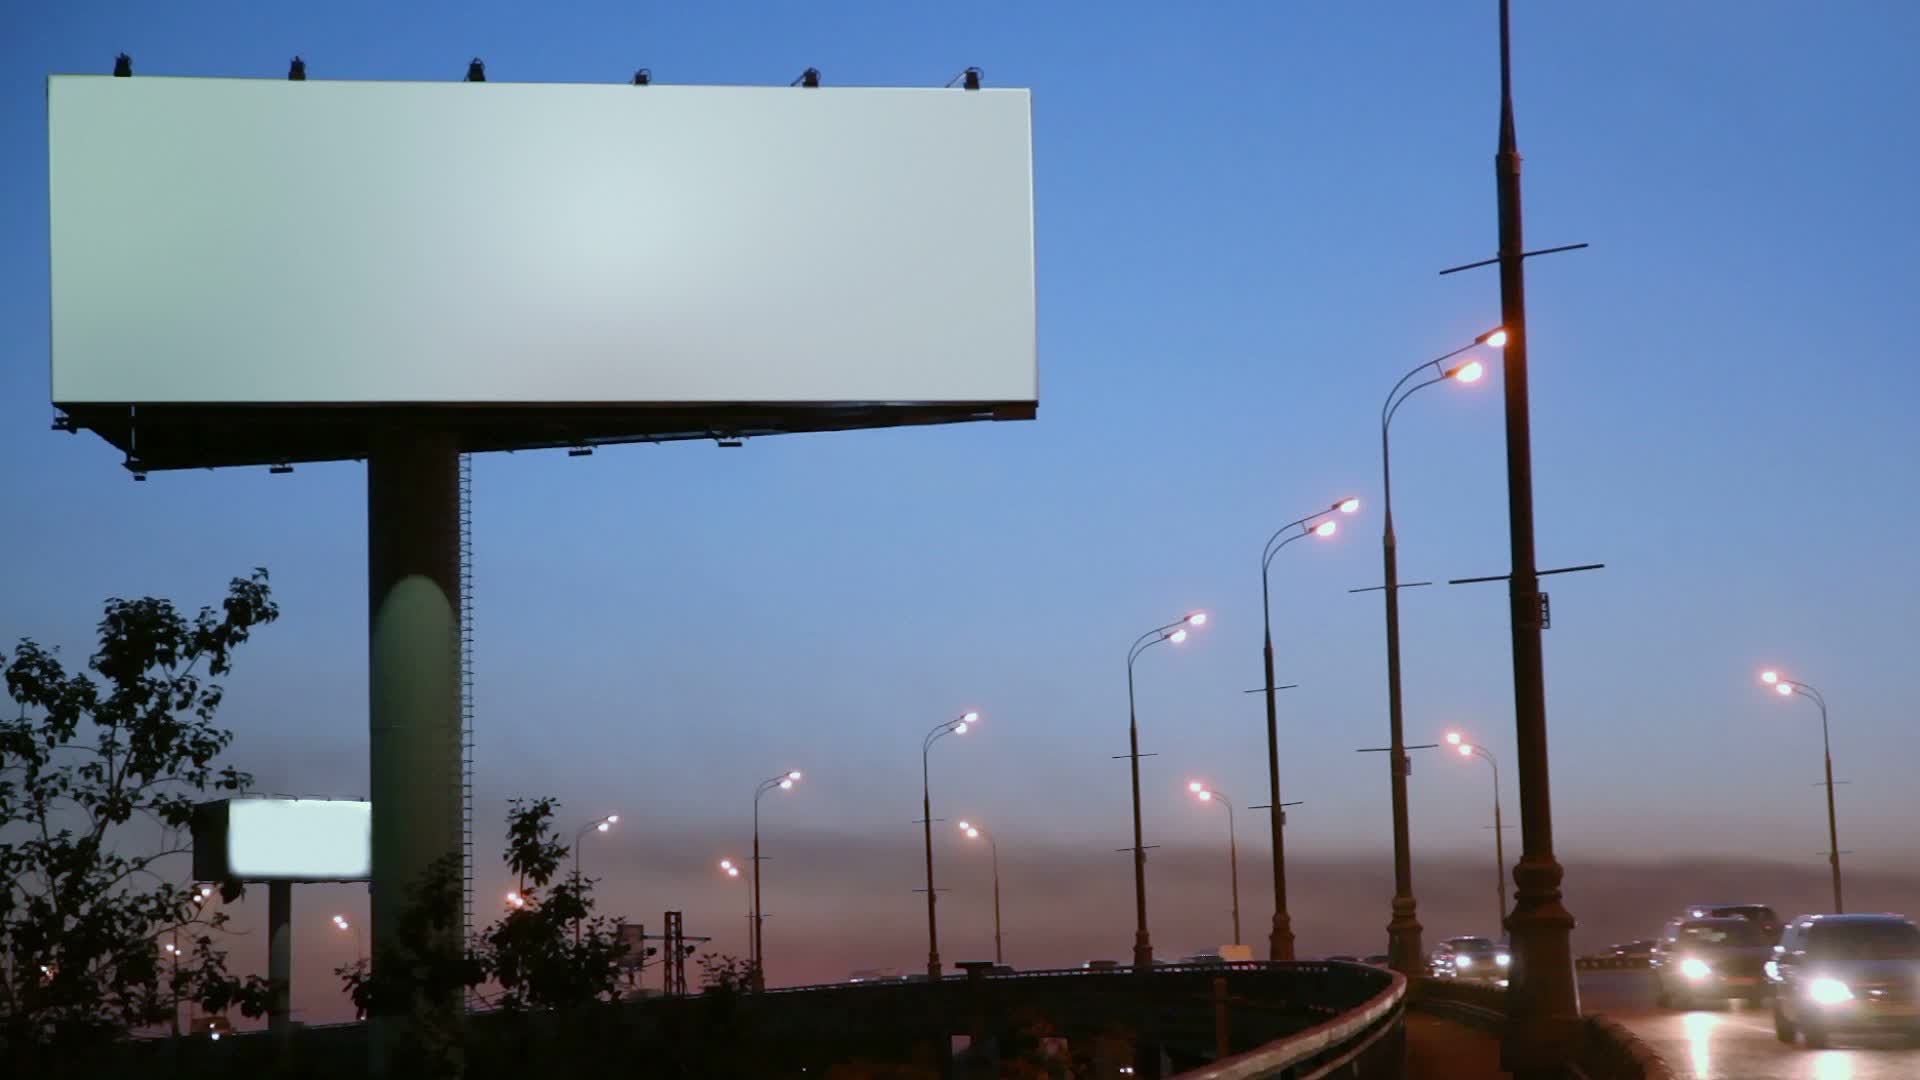 Best Blank Billboard Or Road Sign Wallpaper Image